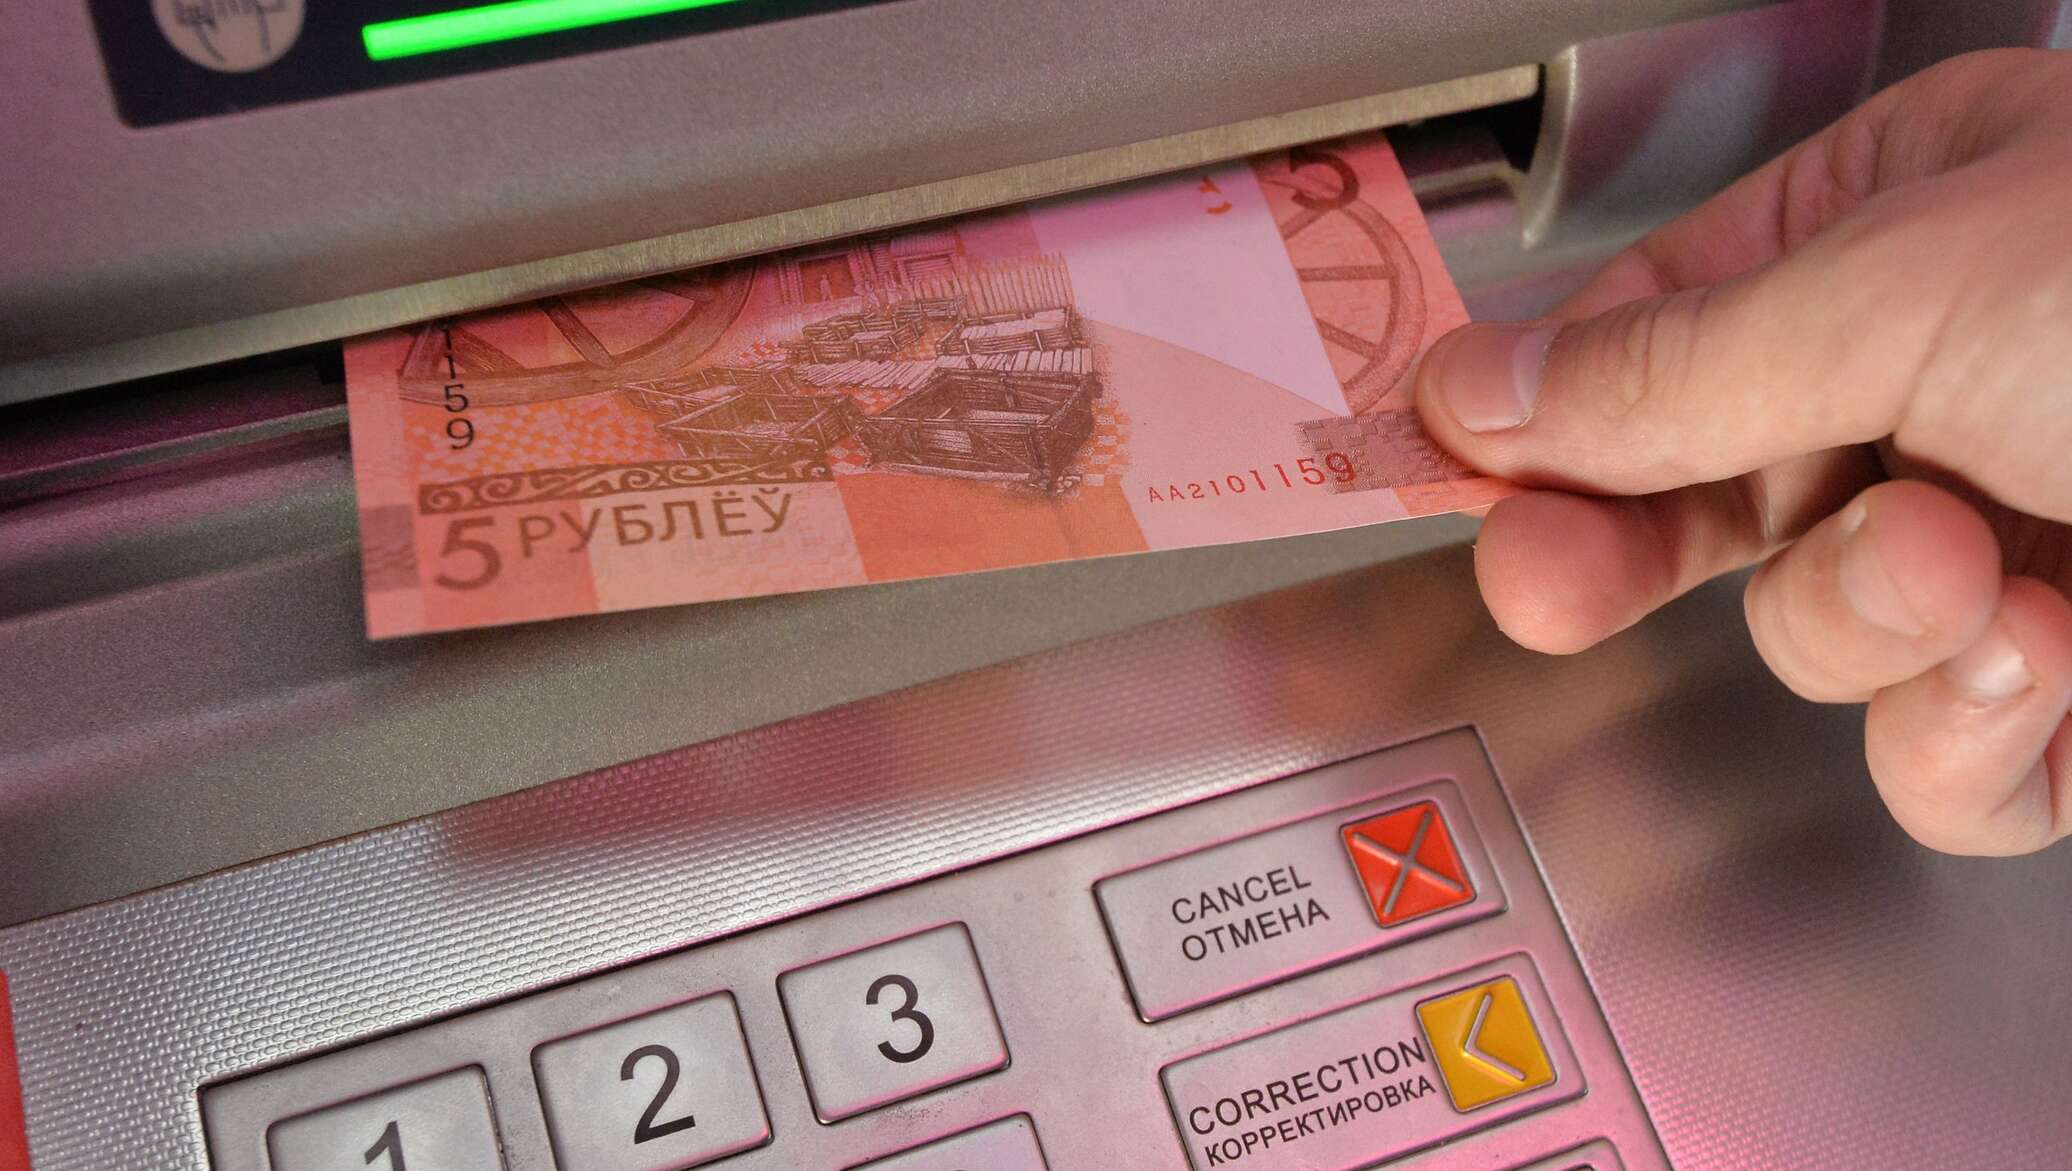 5 рублей банкомат